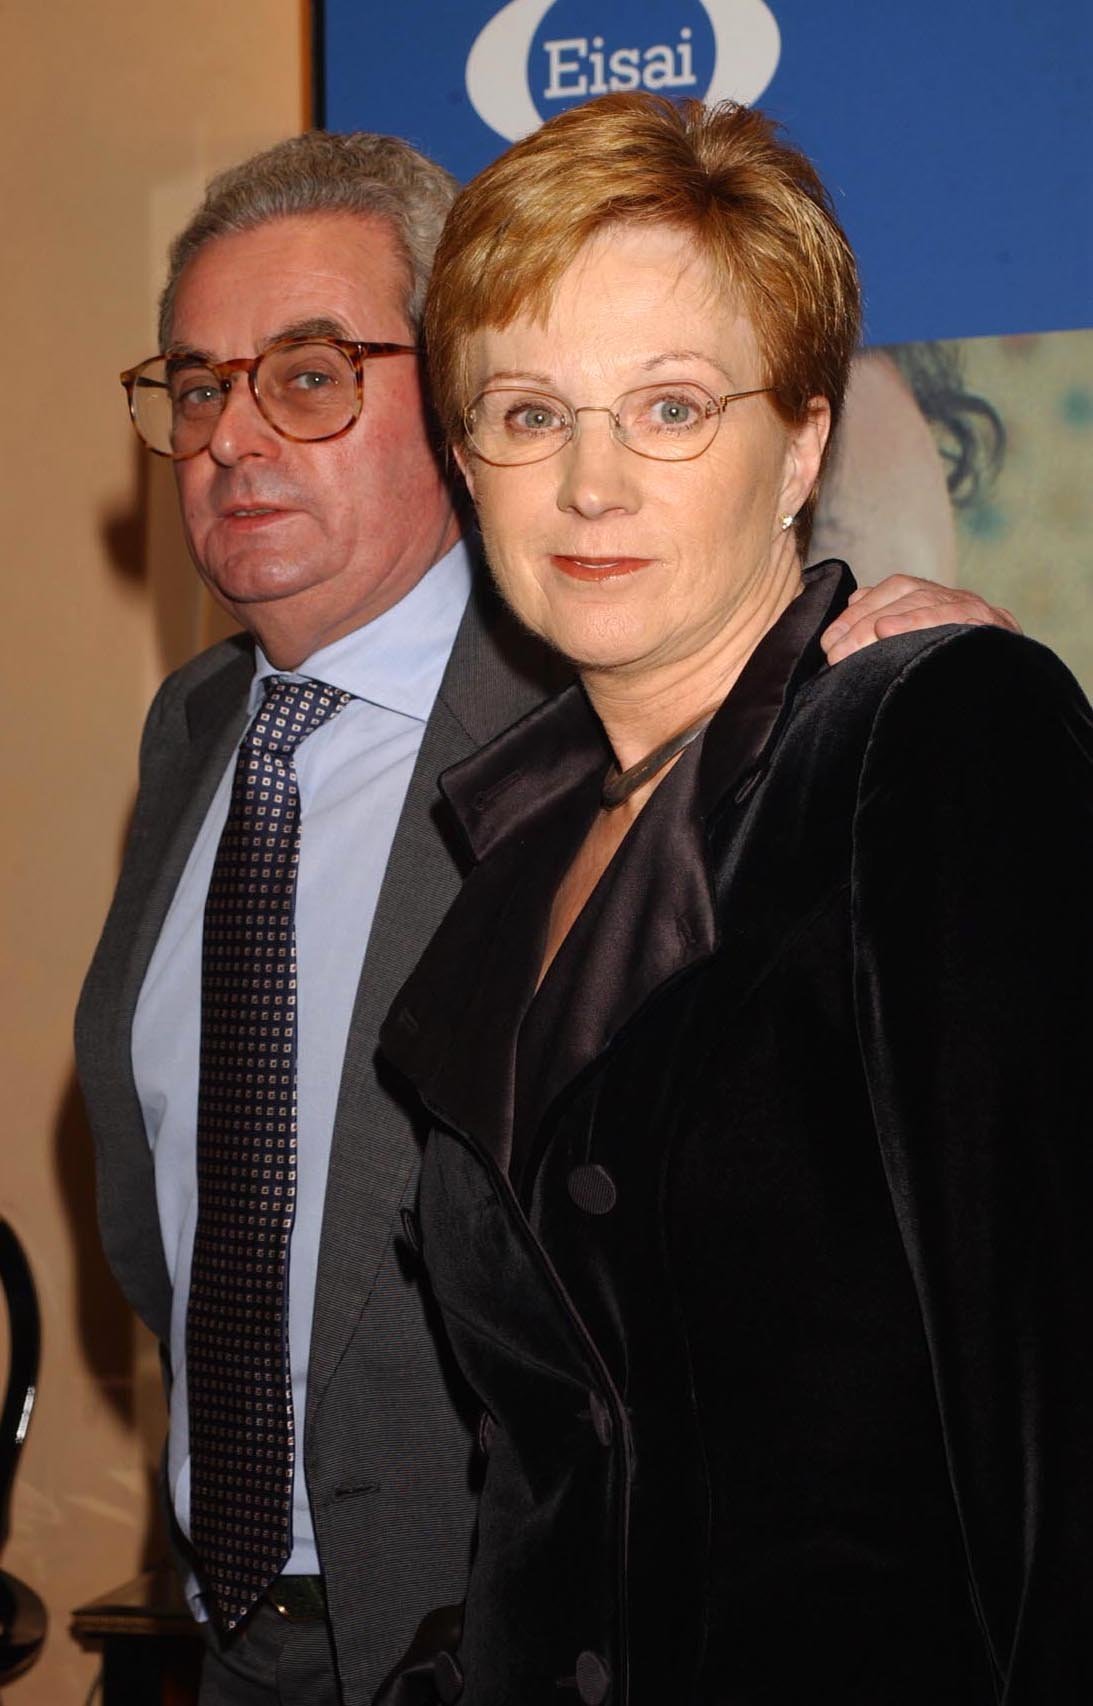 Anne Robinson and her ex-husband John Penrose